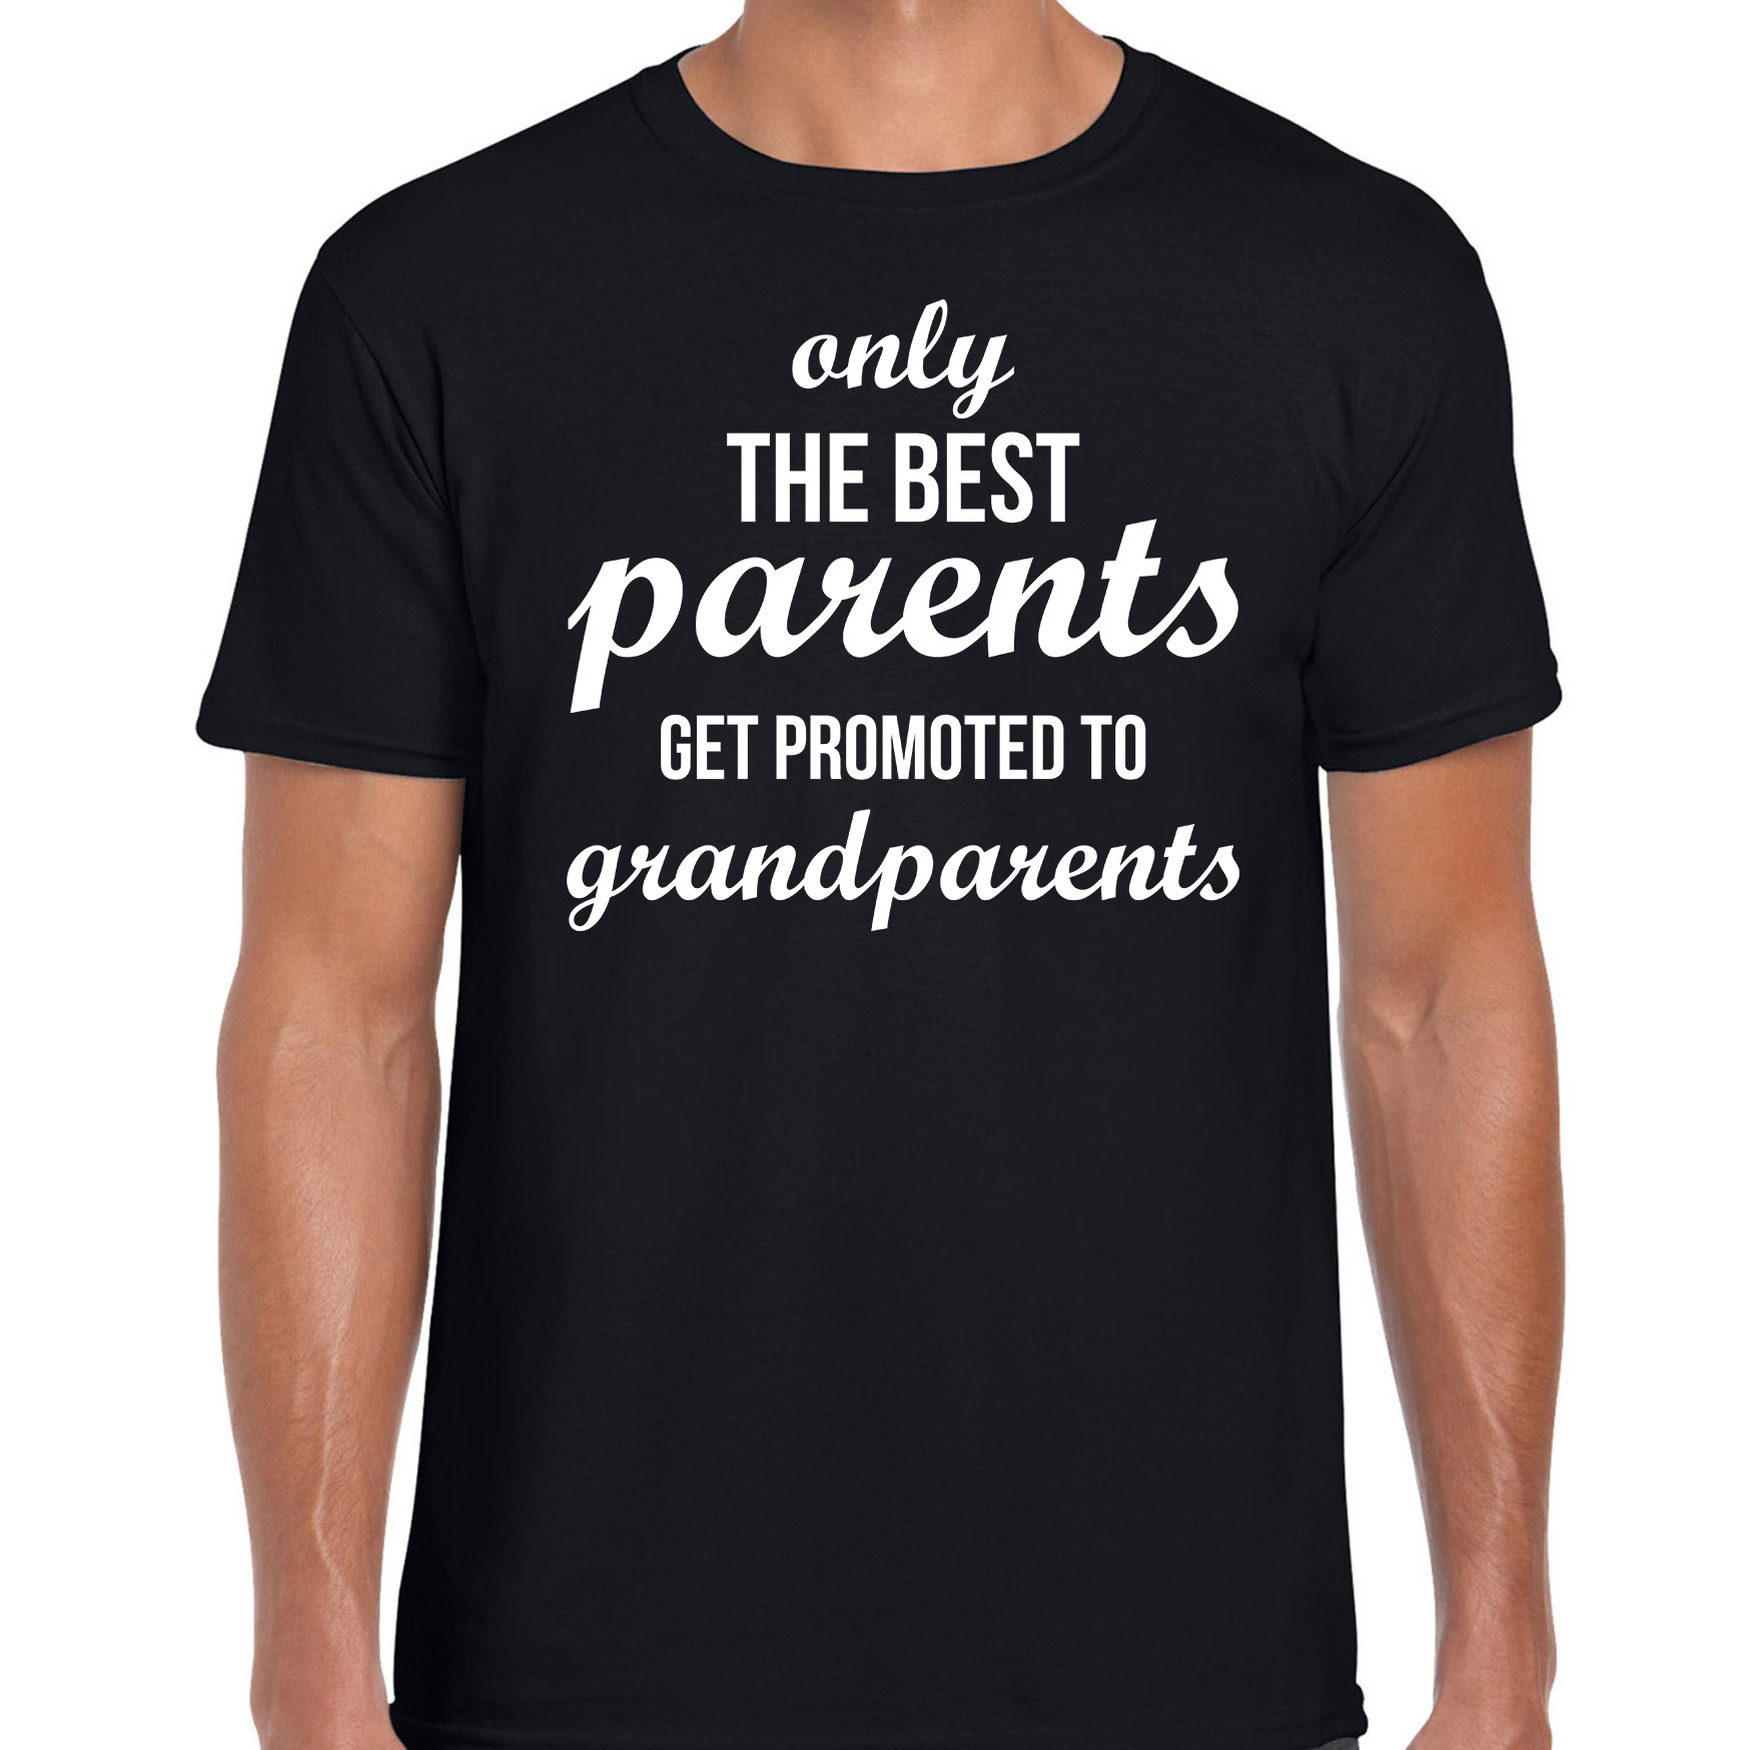 Only the best parents get promoted to grandparents t-shirt zwart voor heren